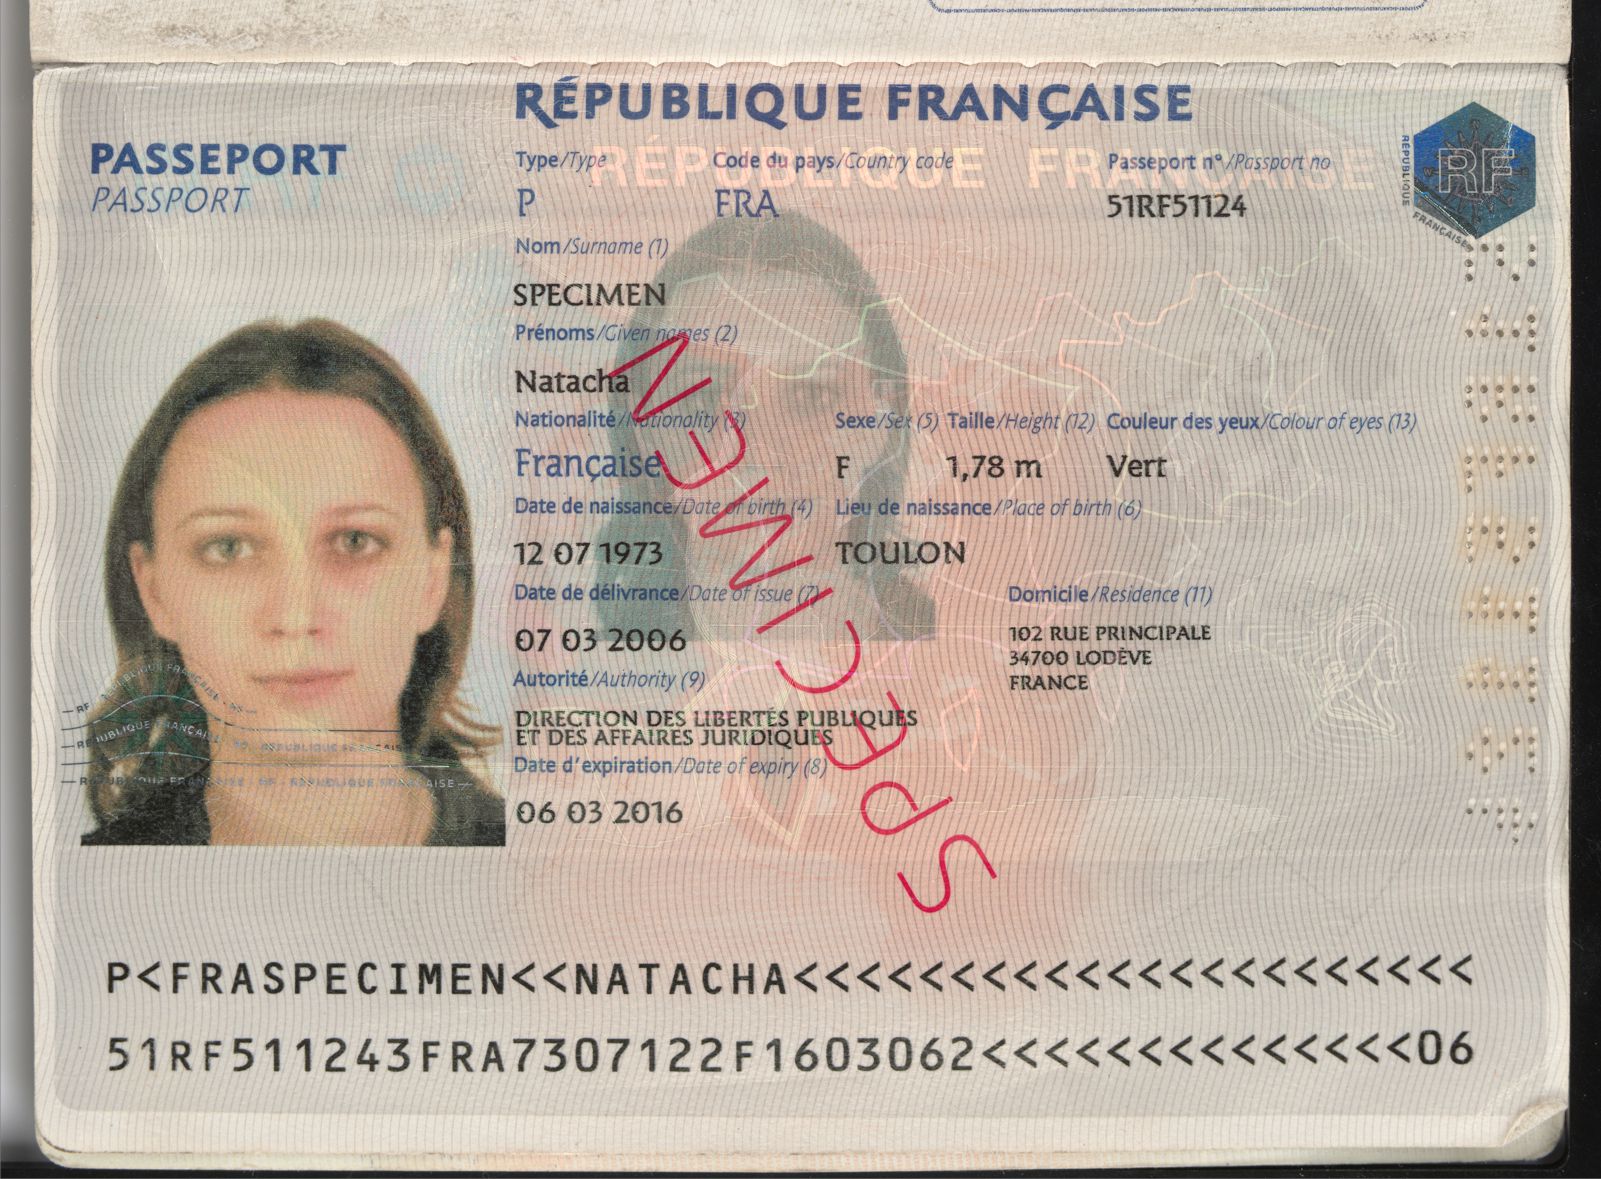 PDi Passport Diffused IR